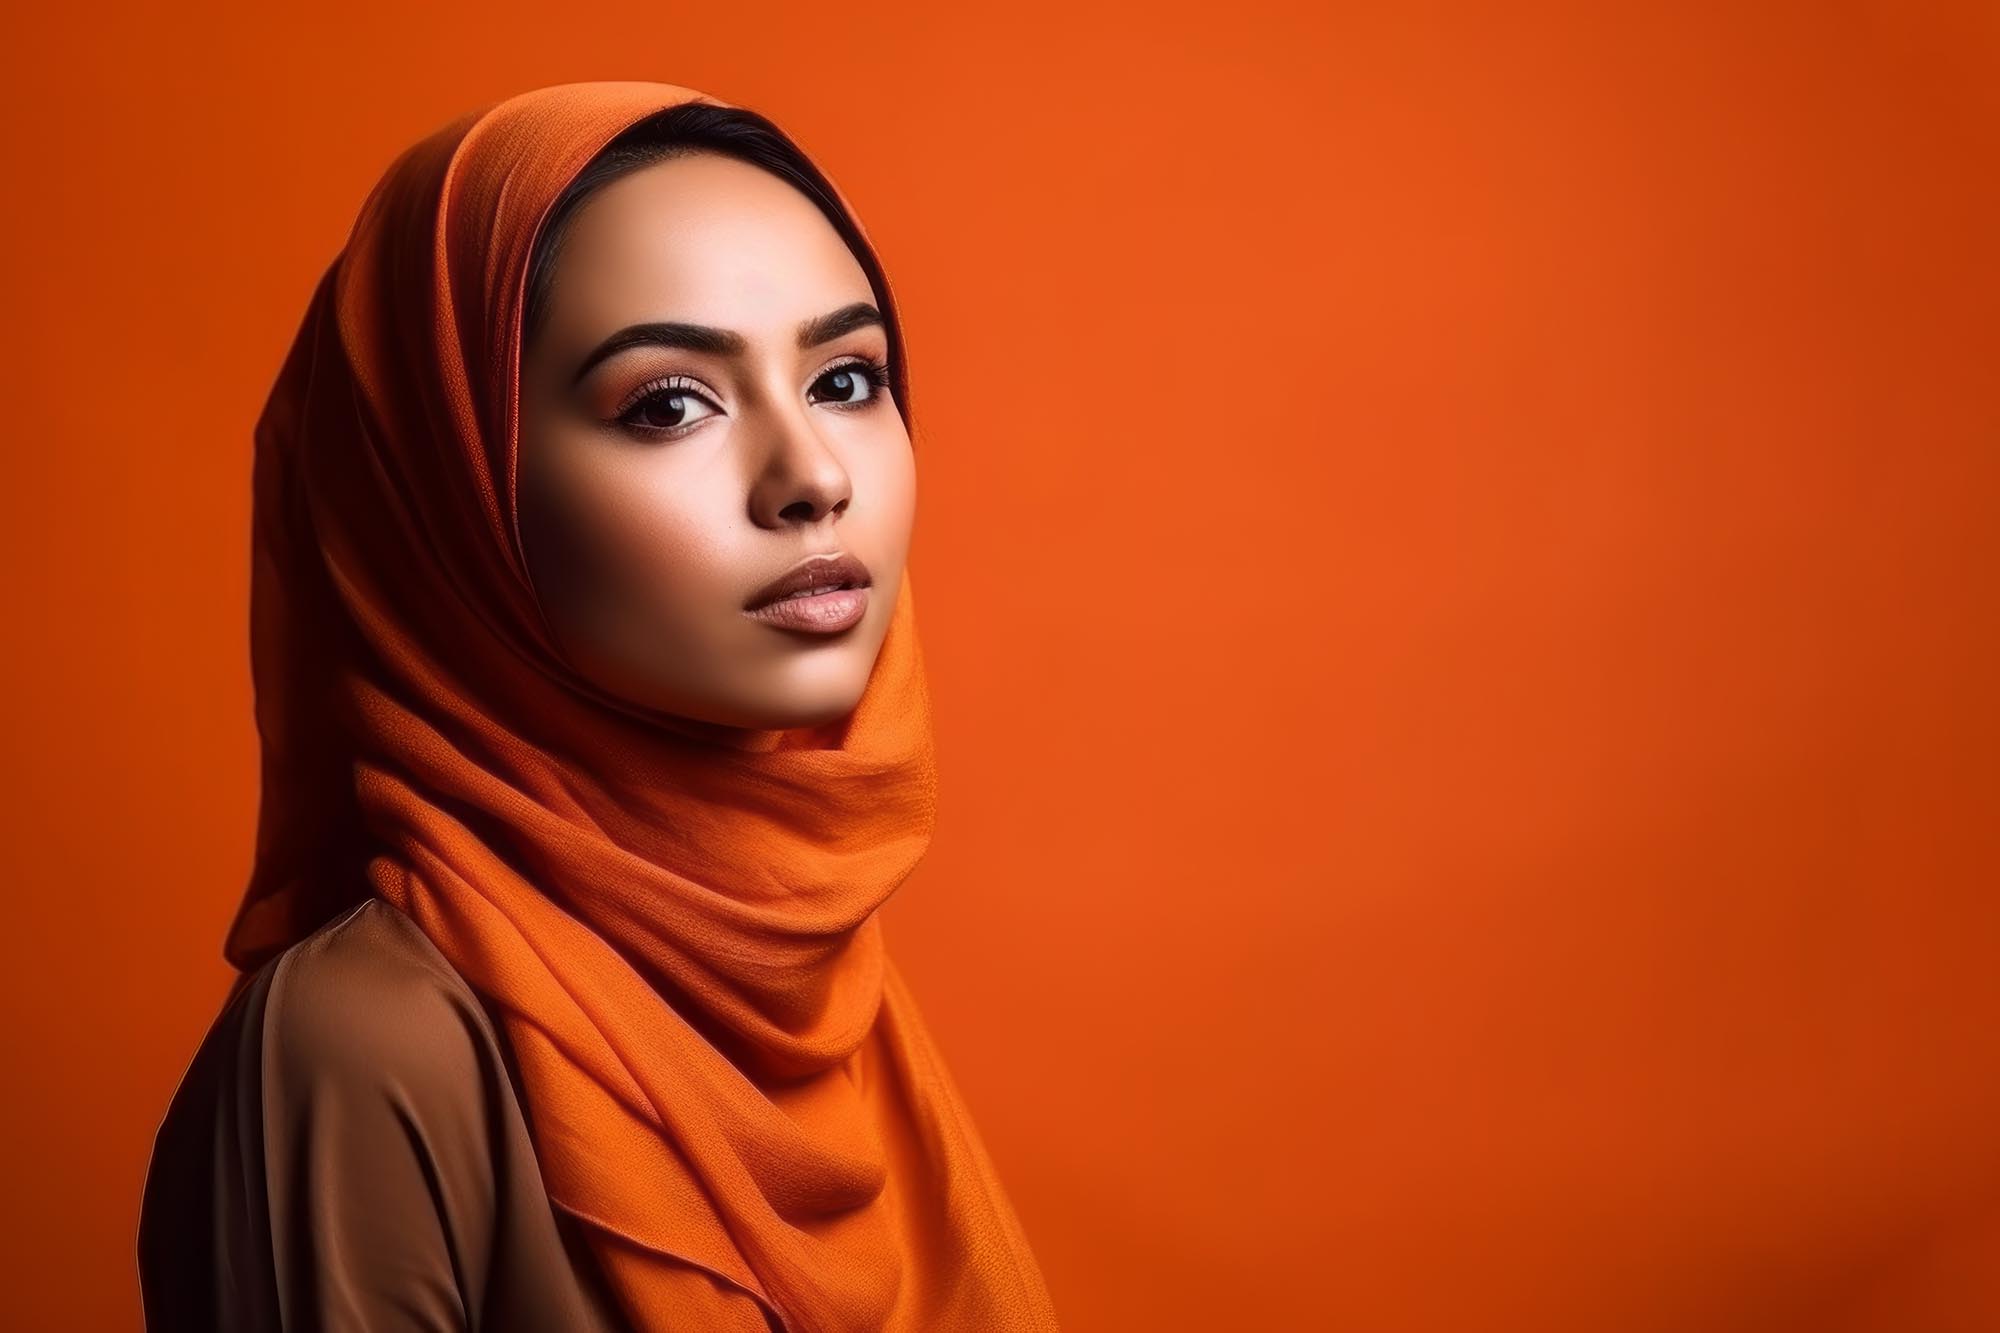 Portrait of woman wearing head covering on orange studio background